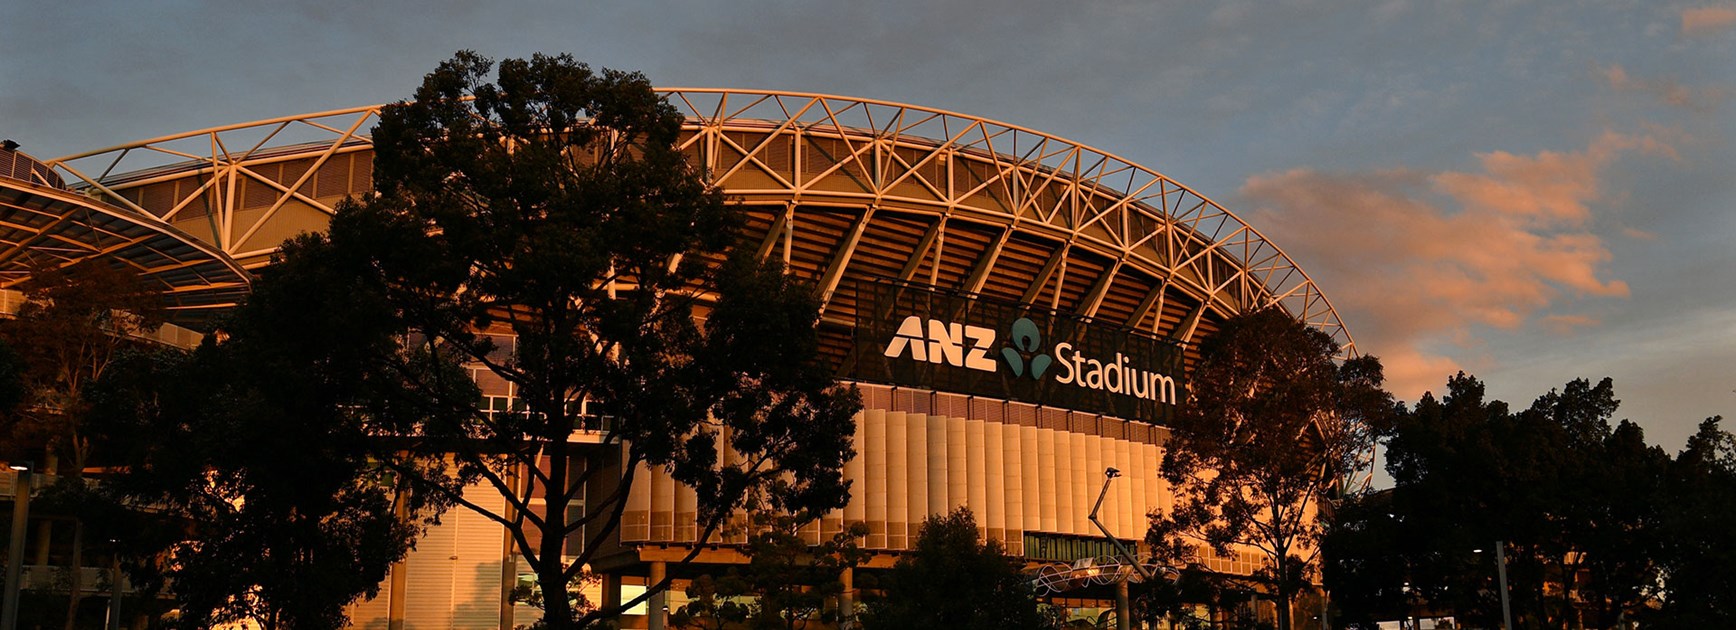 ANZ Stadium initiatives in 2019